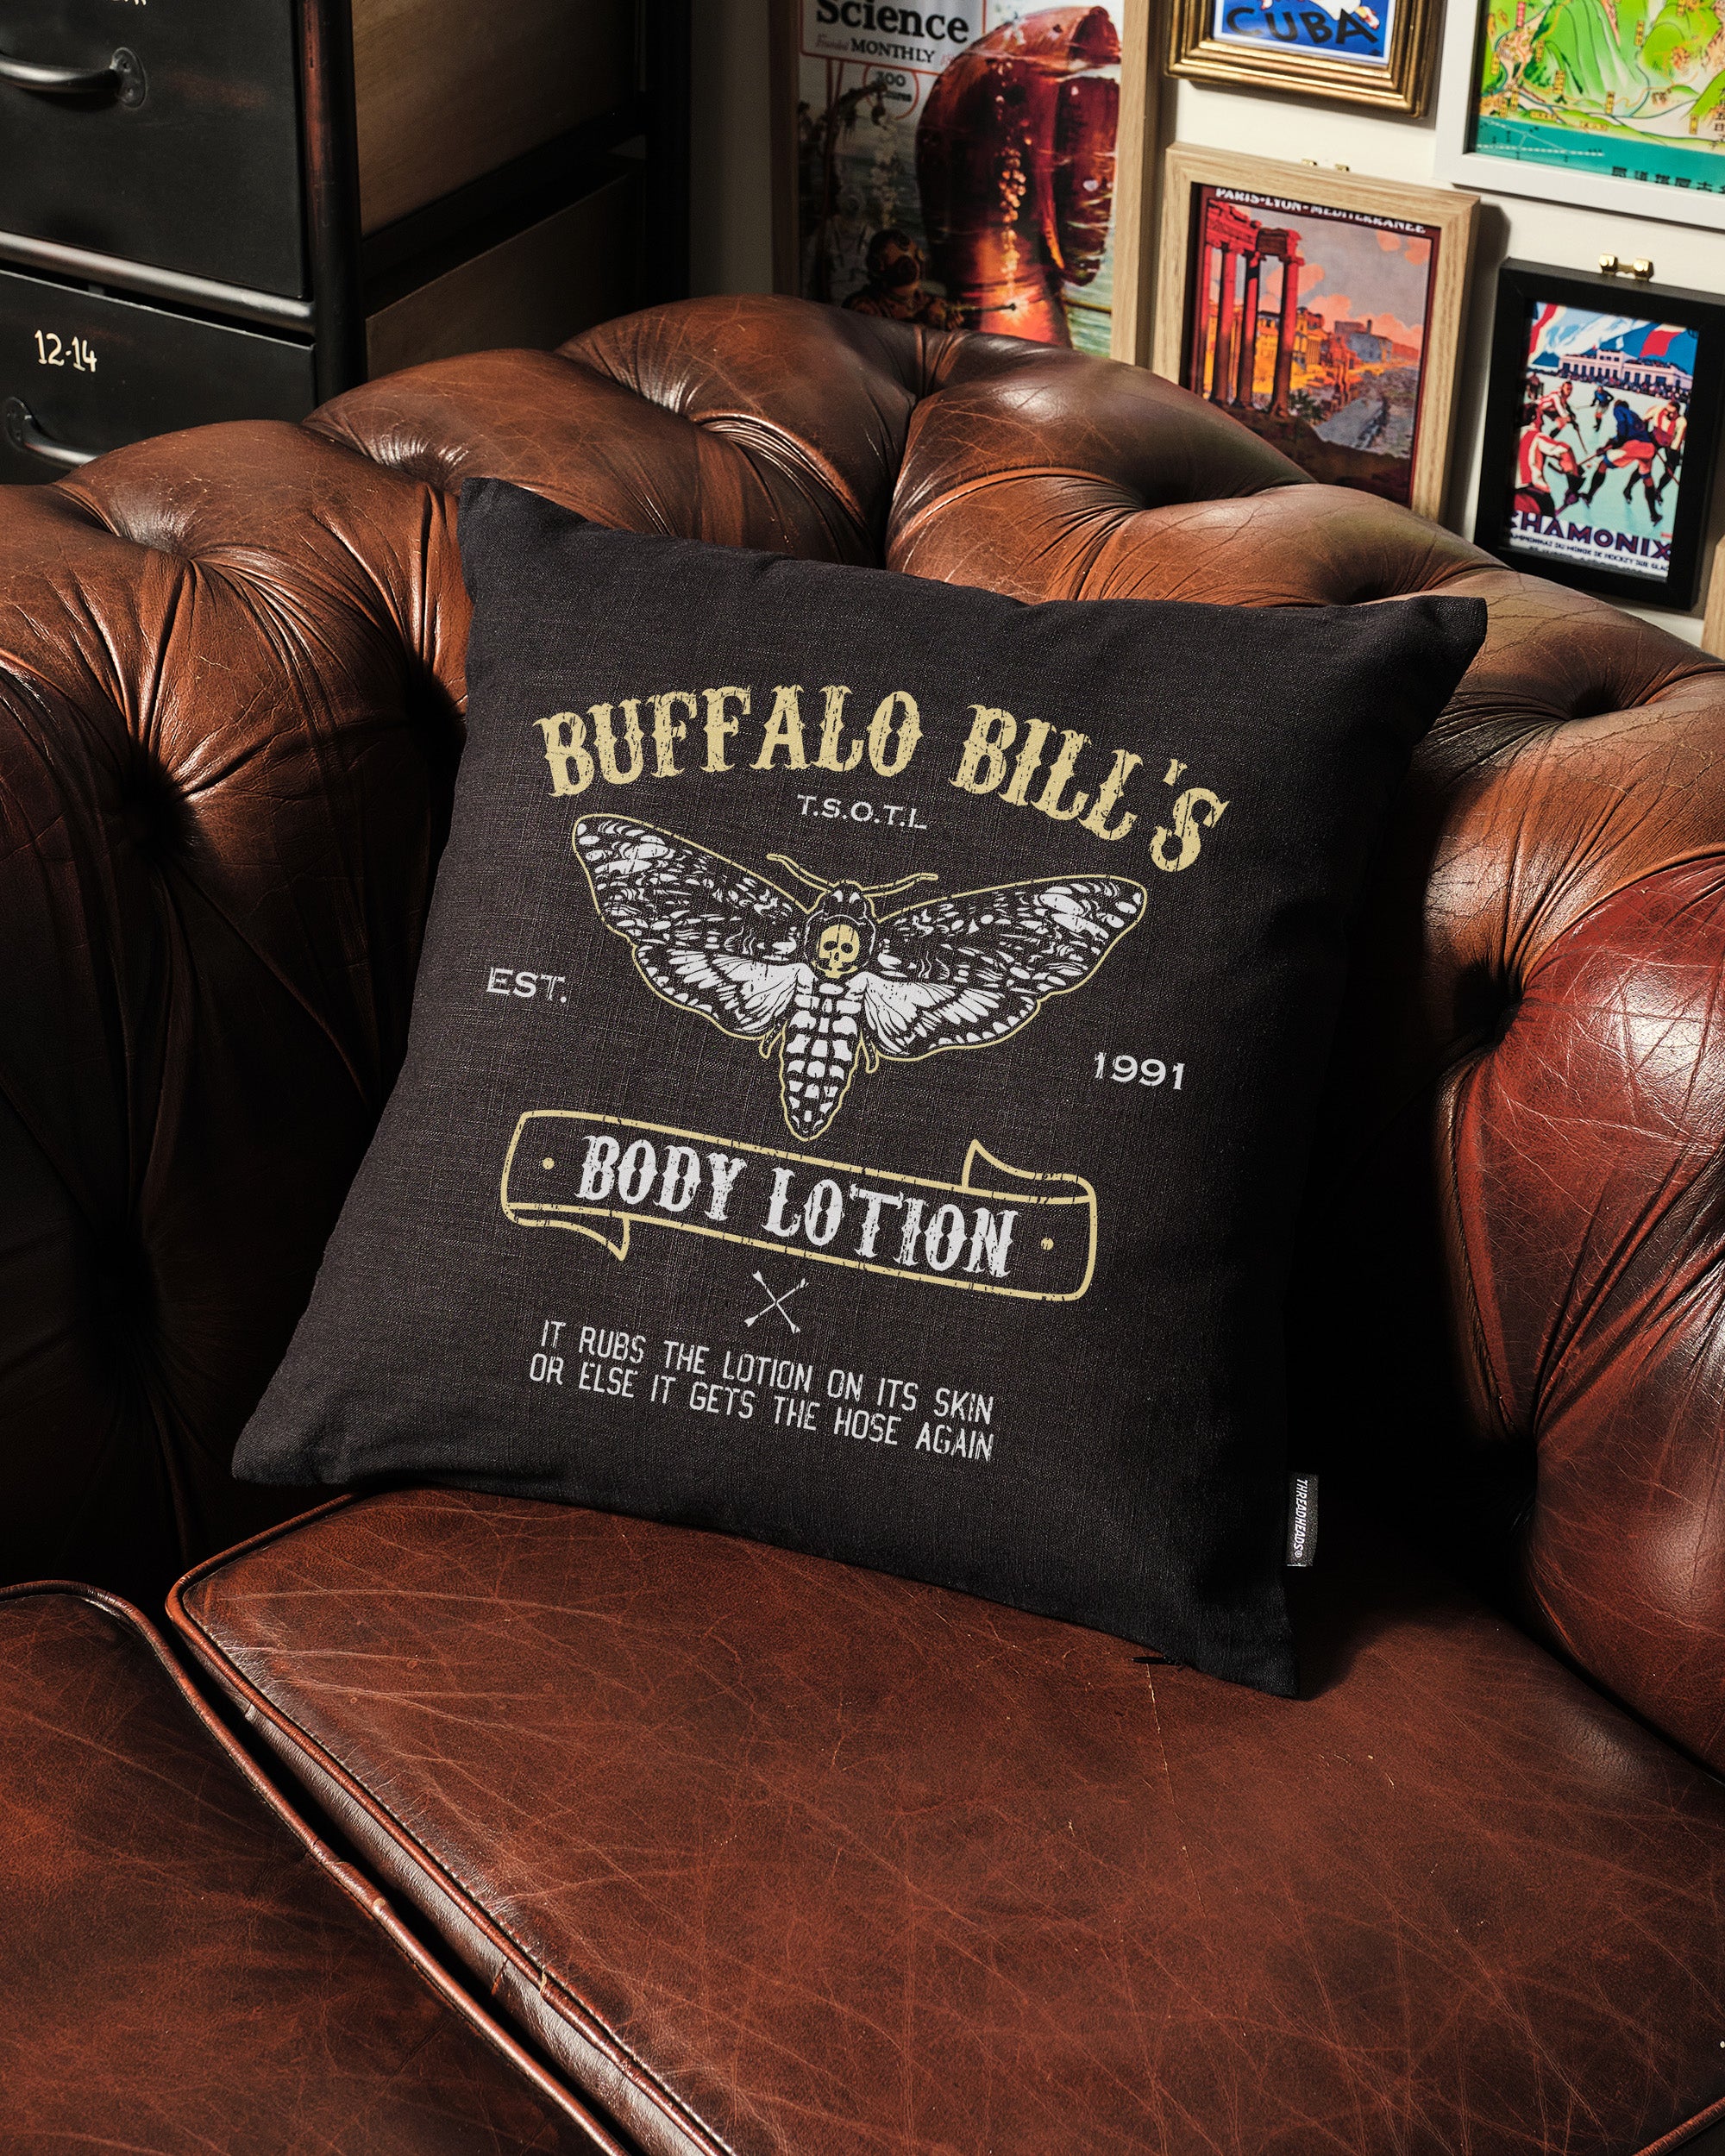 Buffalo Bill's Rubbing Lotion Cushion